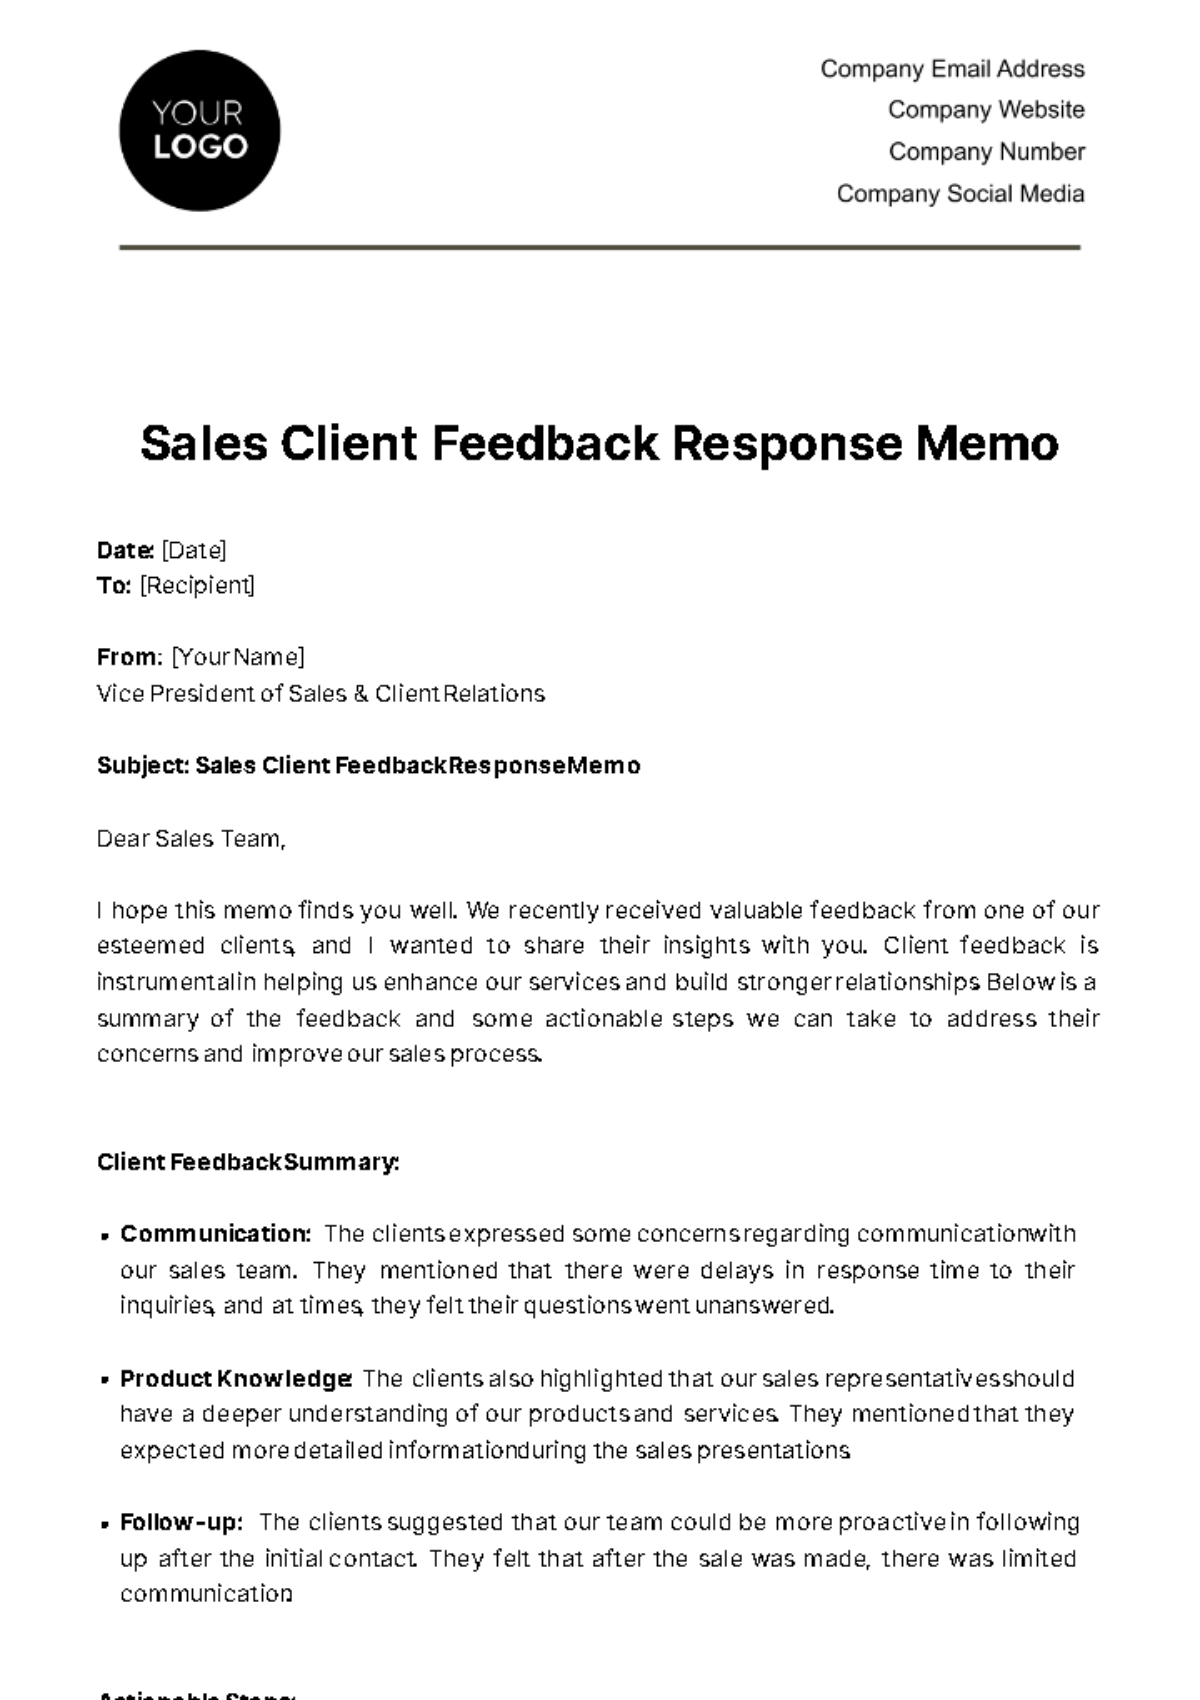 Sales Client Feedback Response Memo Template